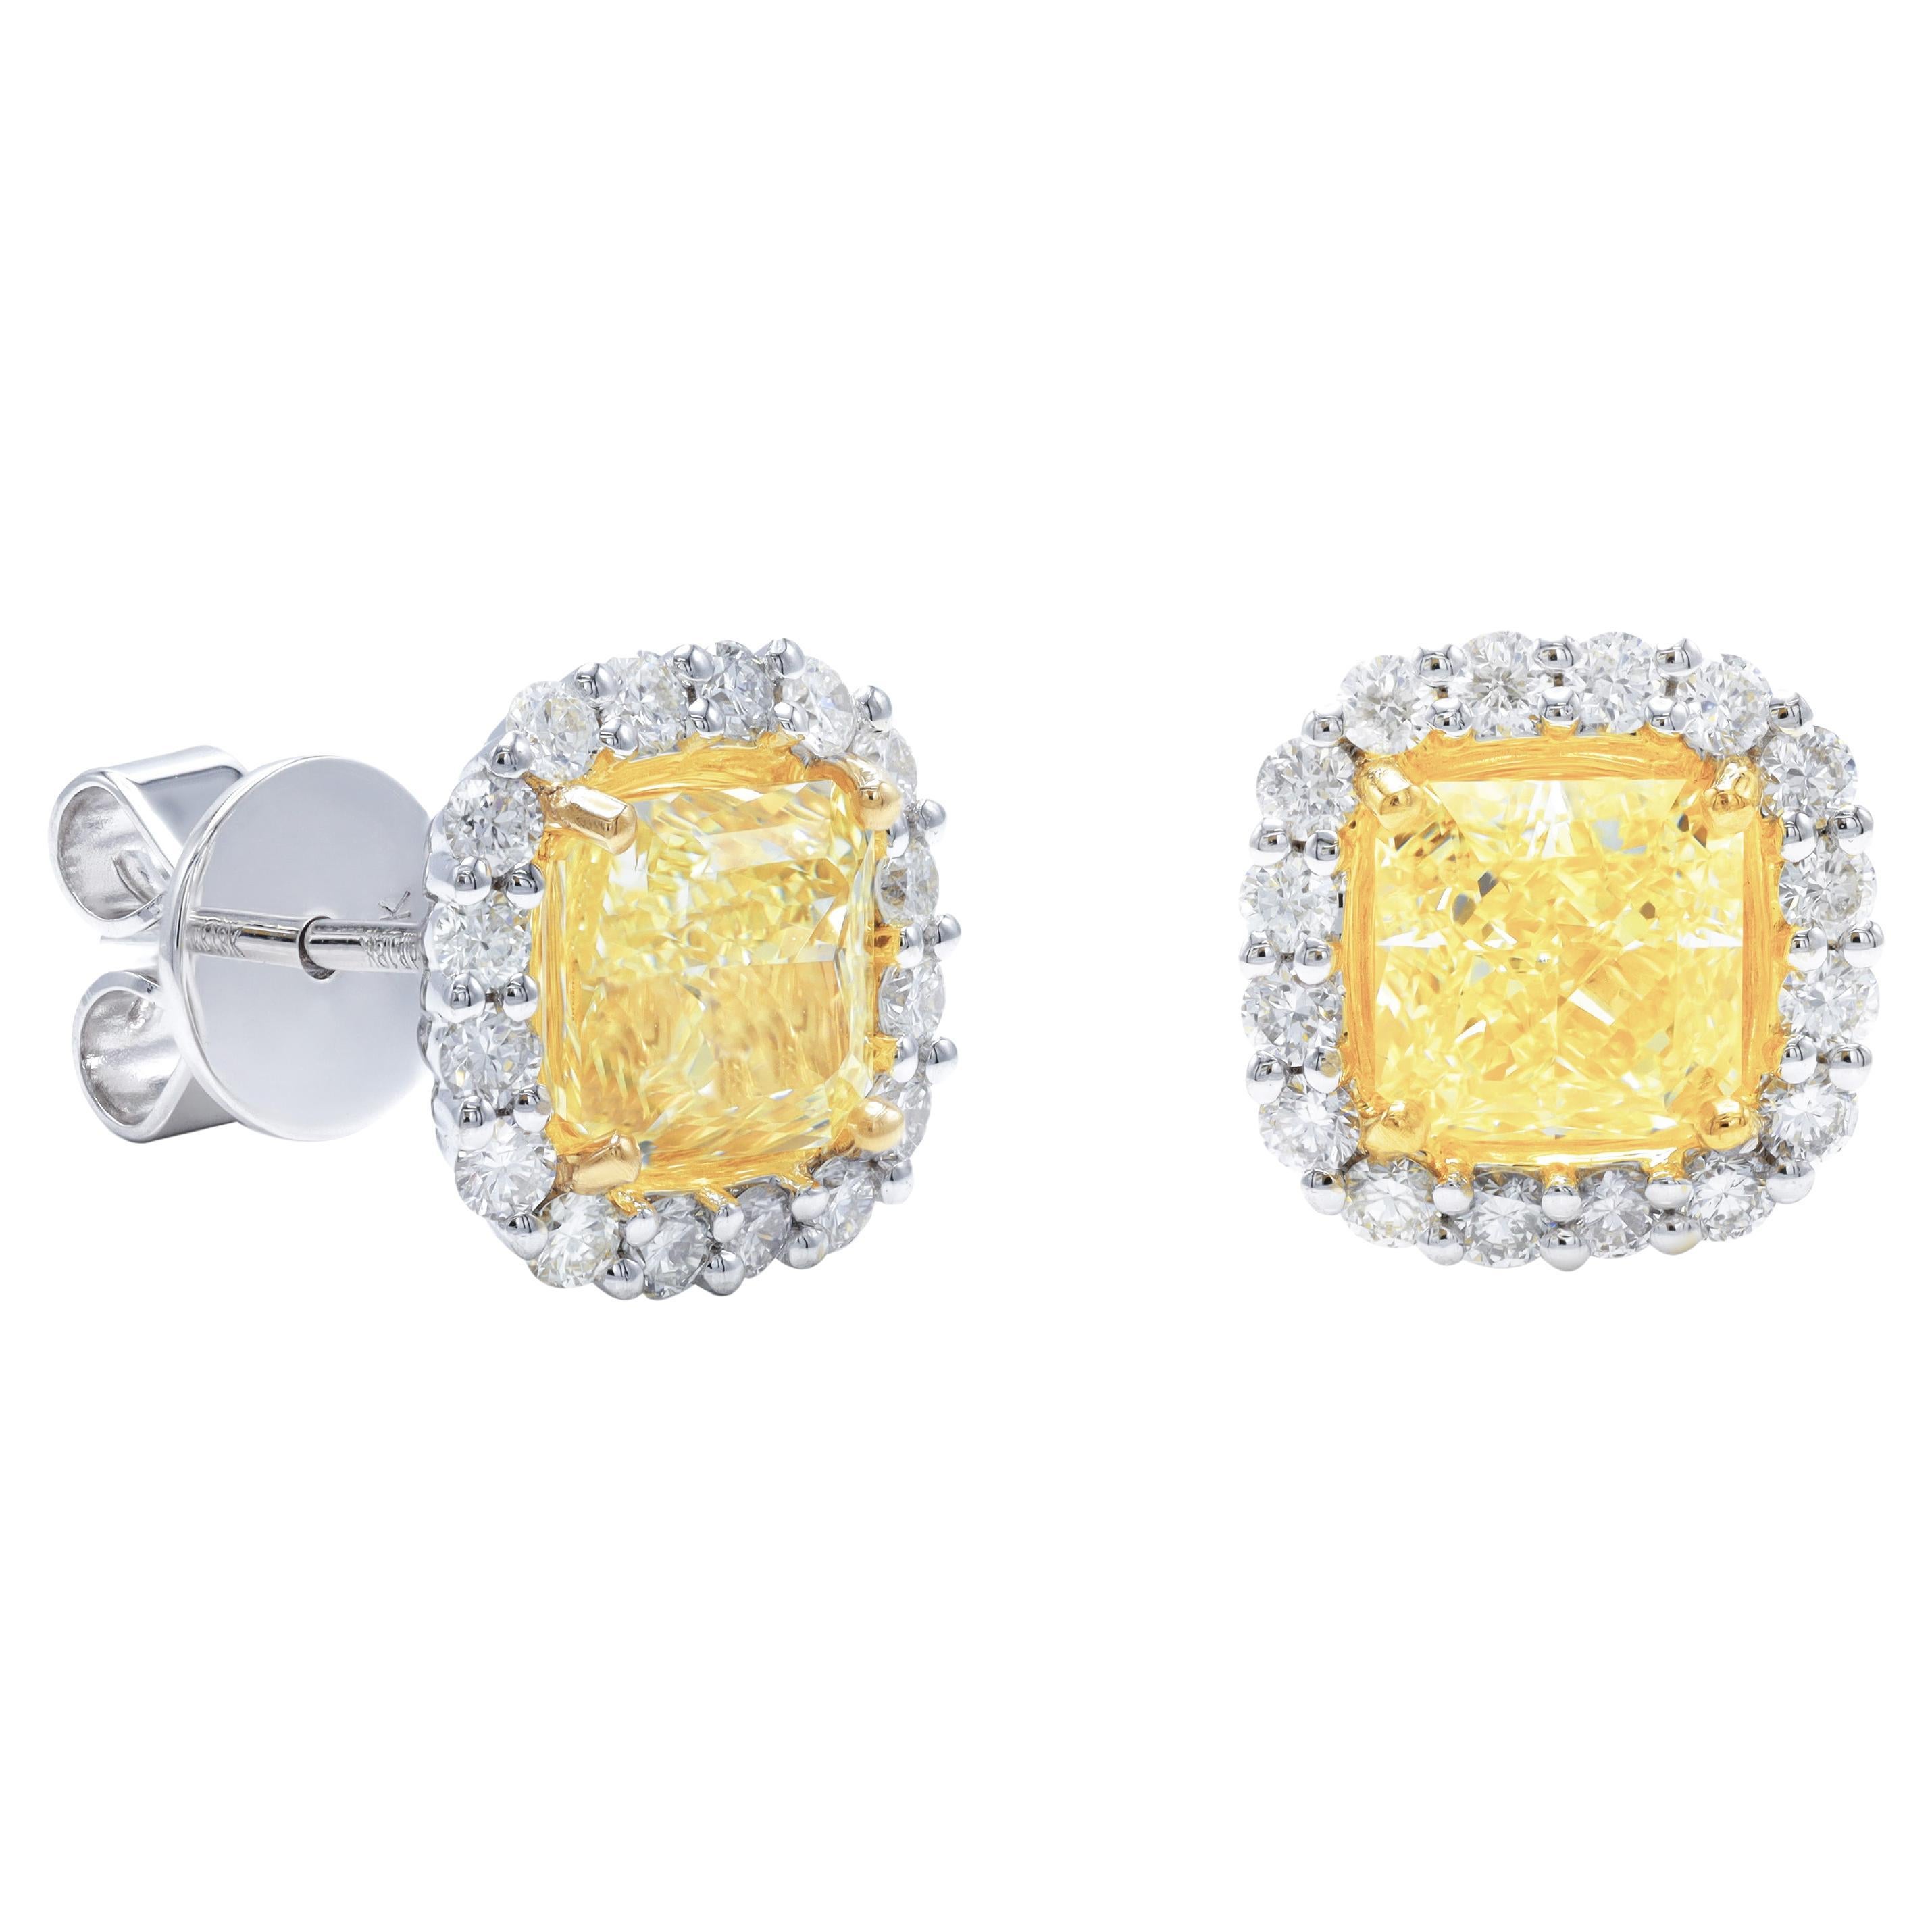 DIANA M. 18kt cushion shape yellow diamond earrings 3.08ct center 1.50ct halo